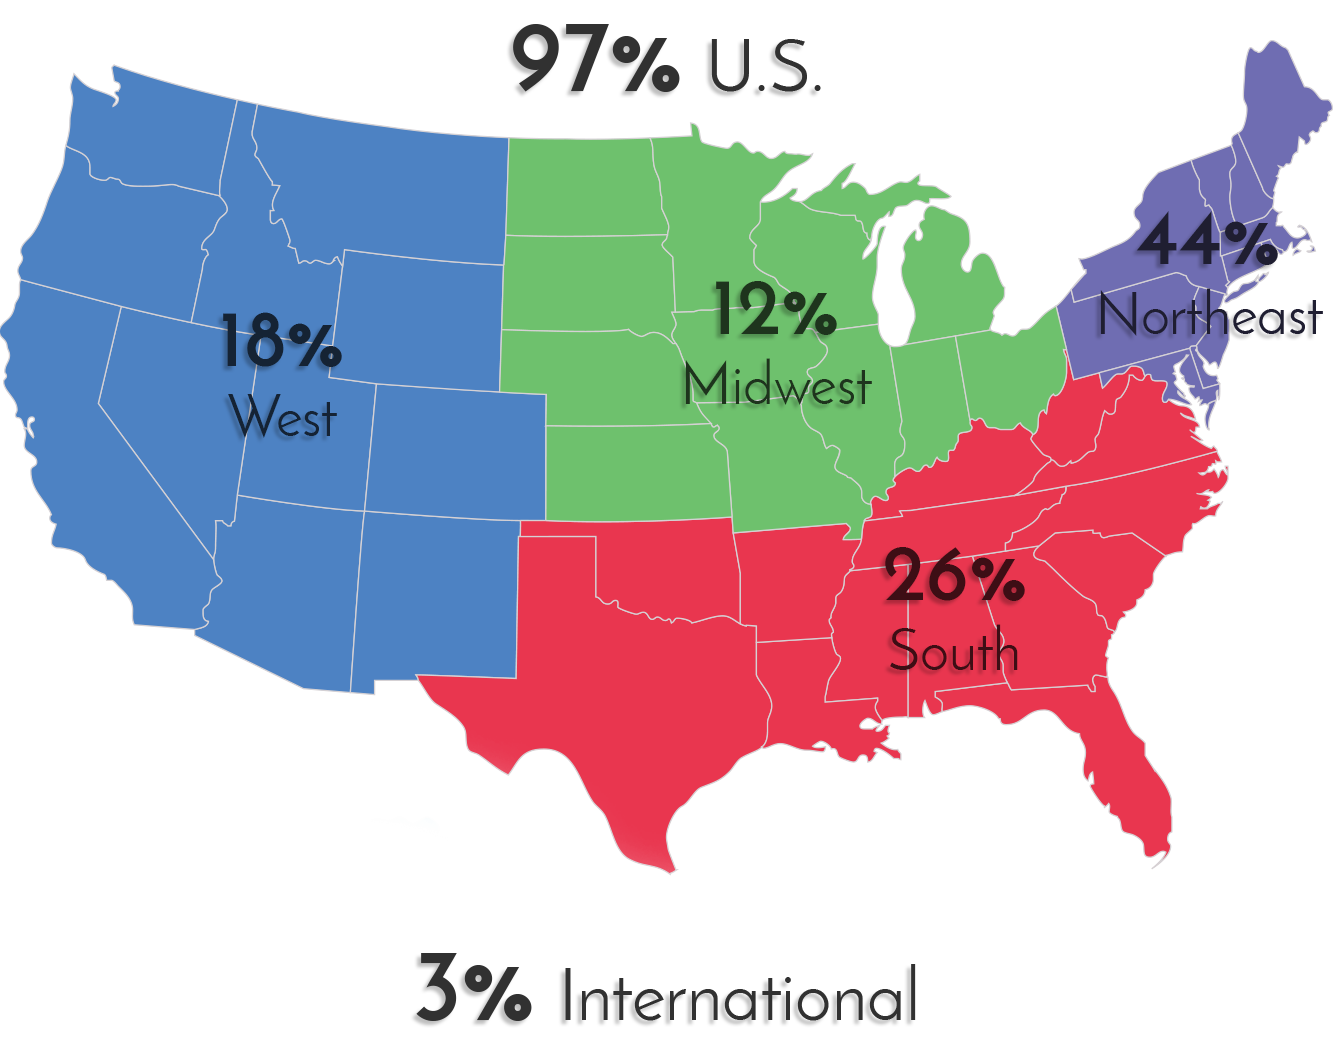 Map of Enrollment Percentages by U.S. Region